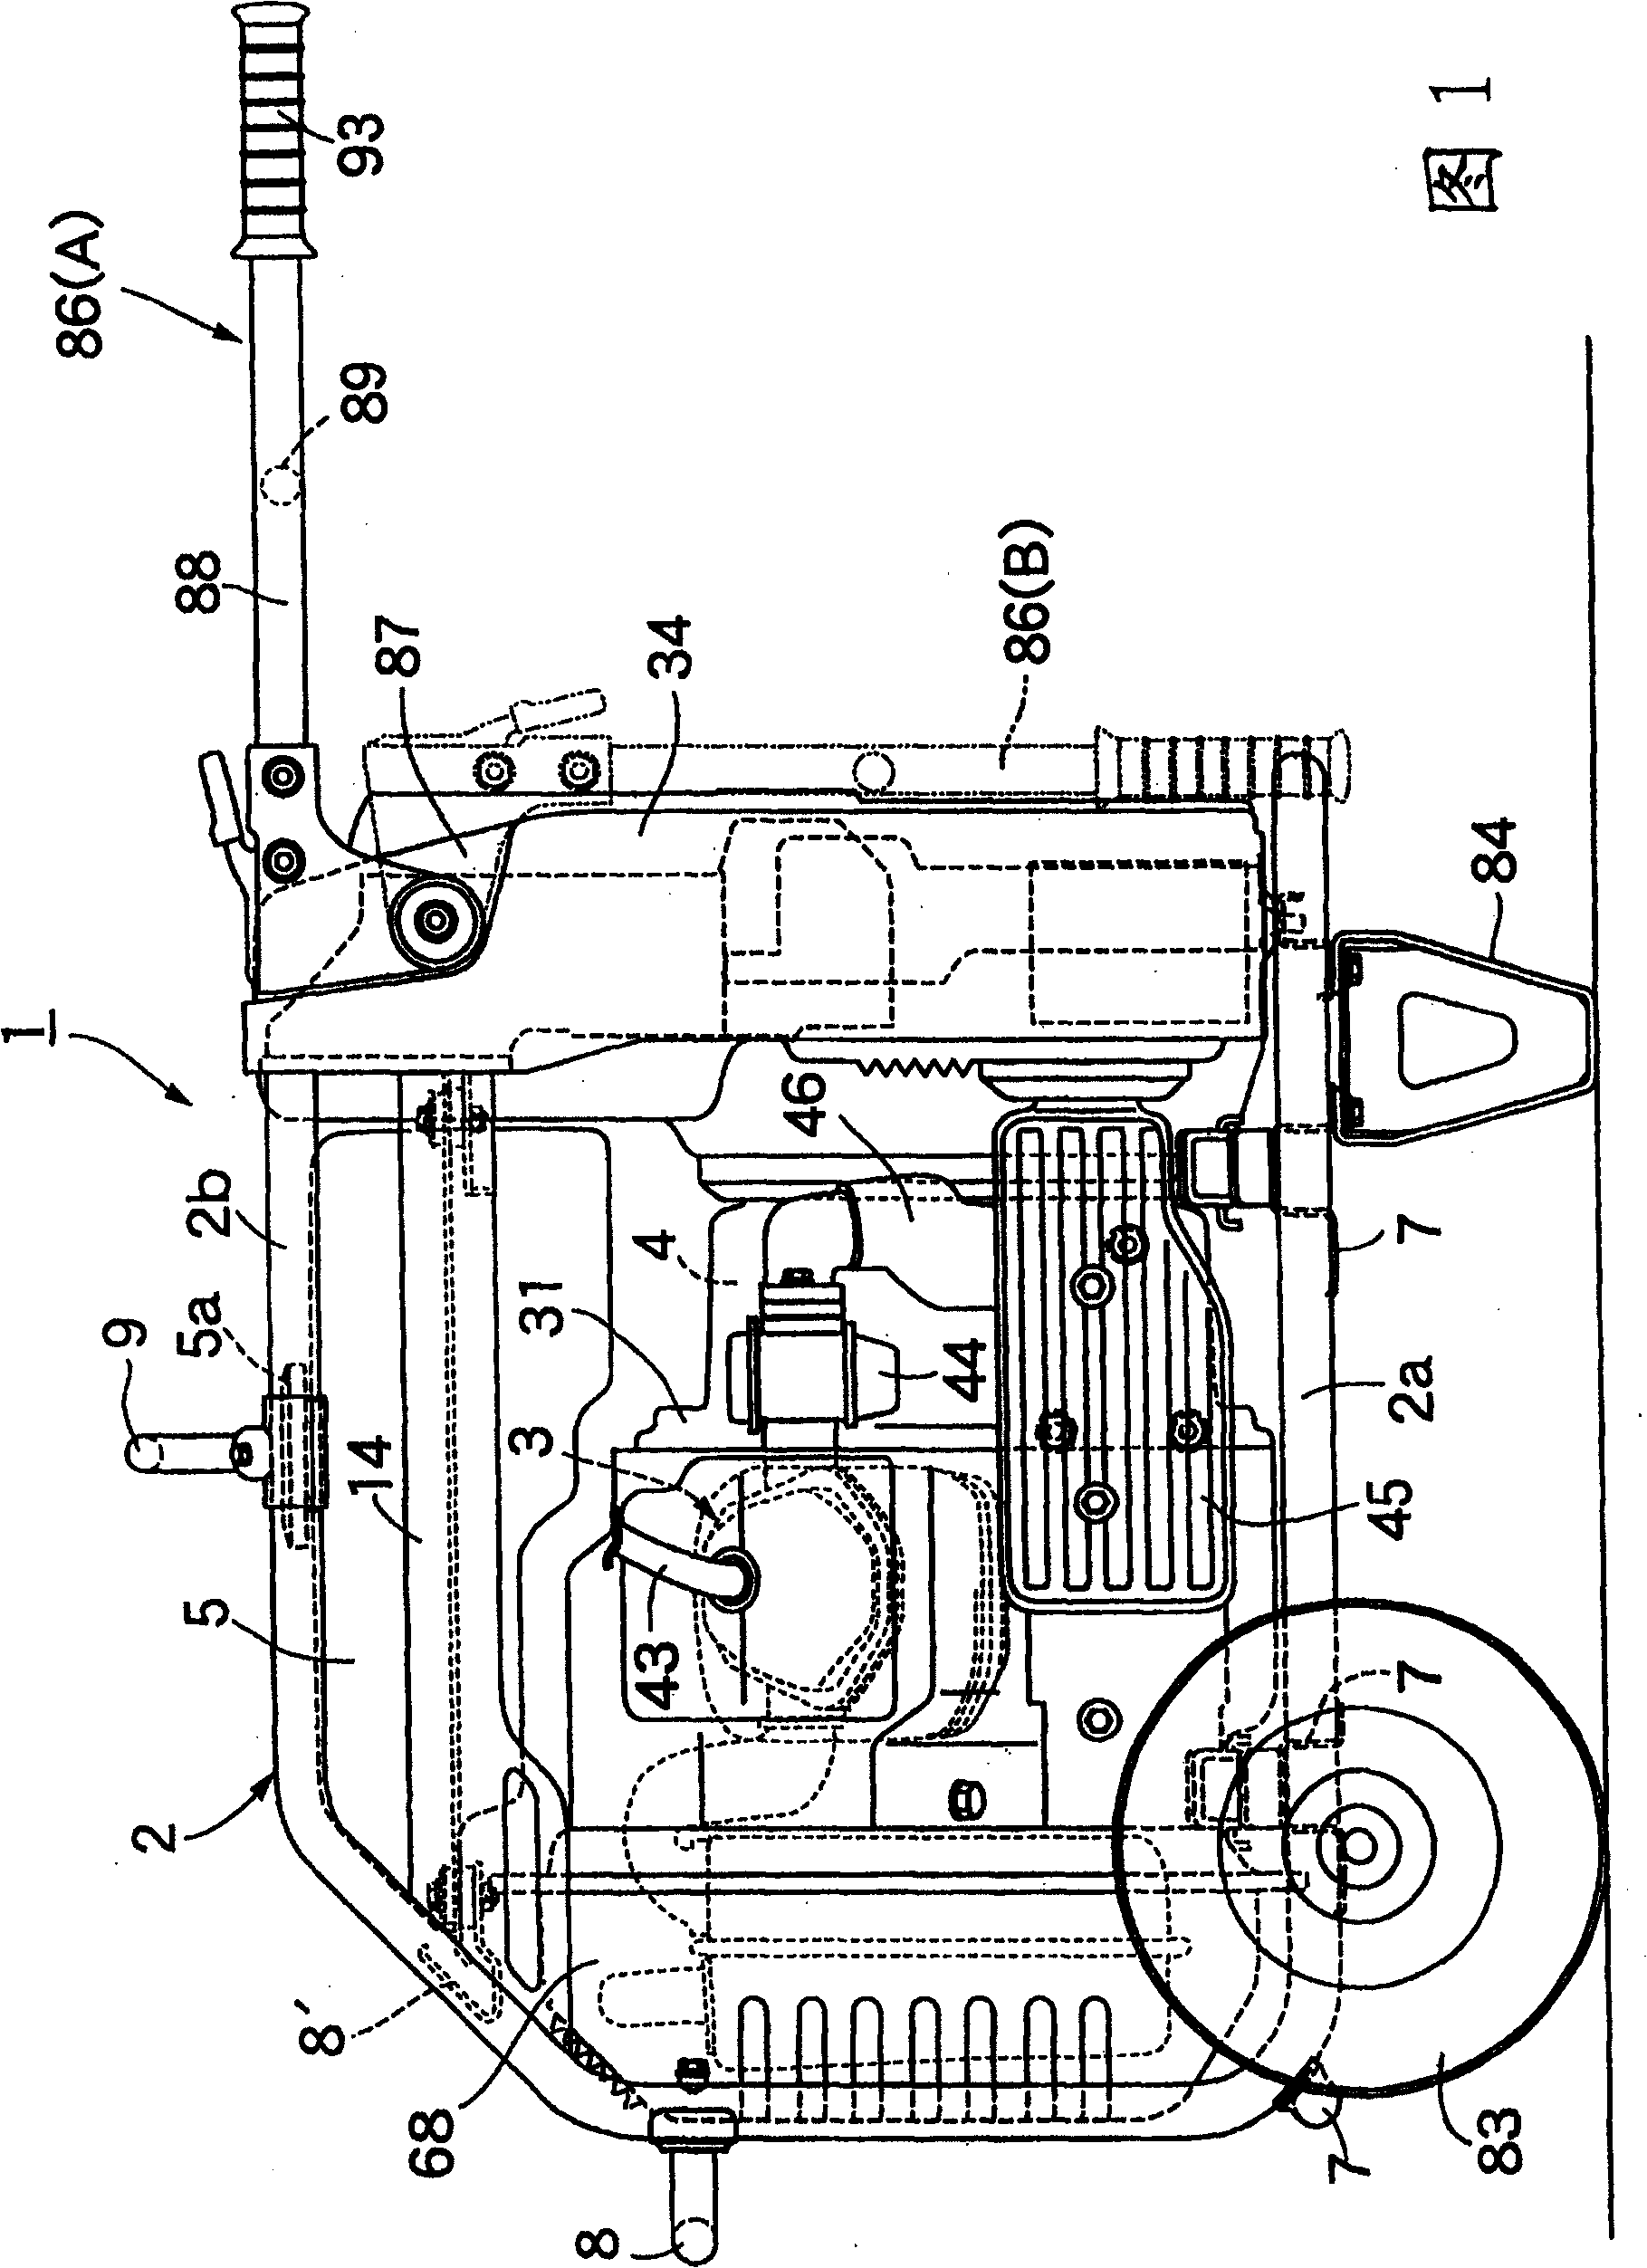 Engine-driven electric generator